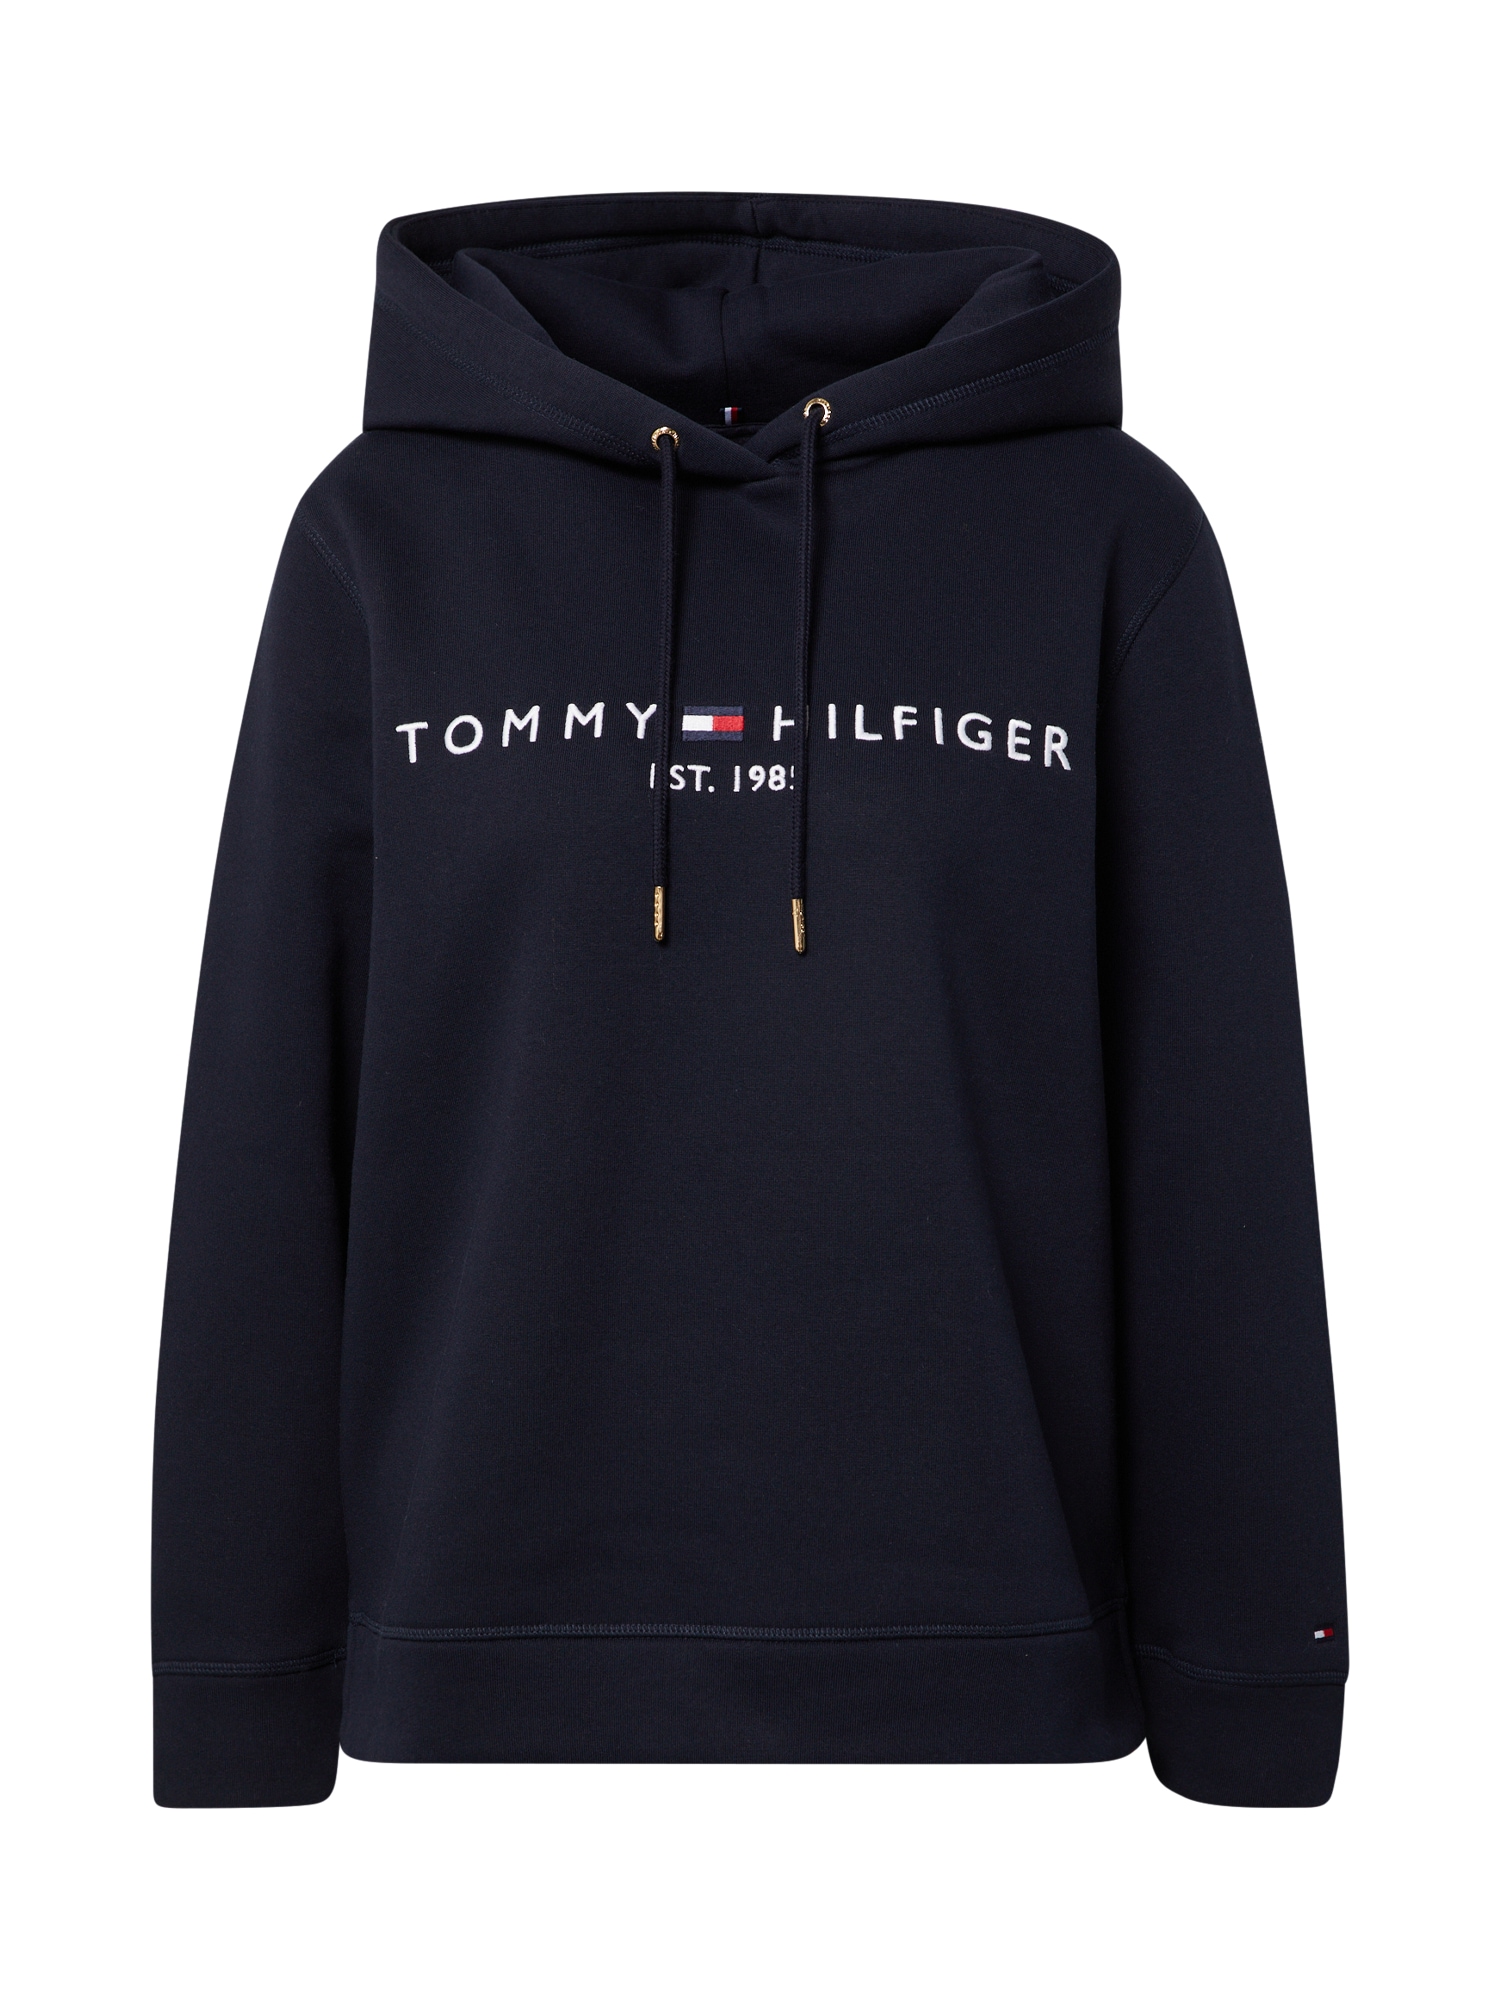 Tommy Hilfiger TOMMY HILFIGER Sweatshirt marine / nachtblau / rot / weiß